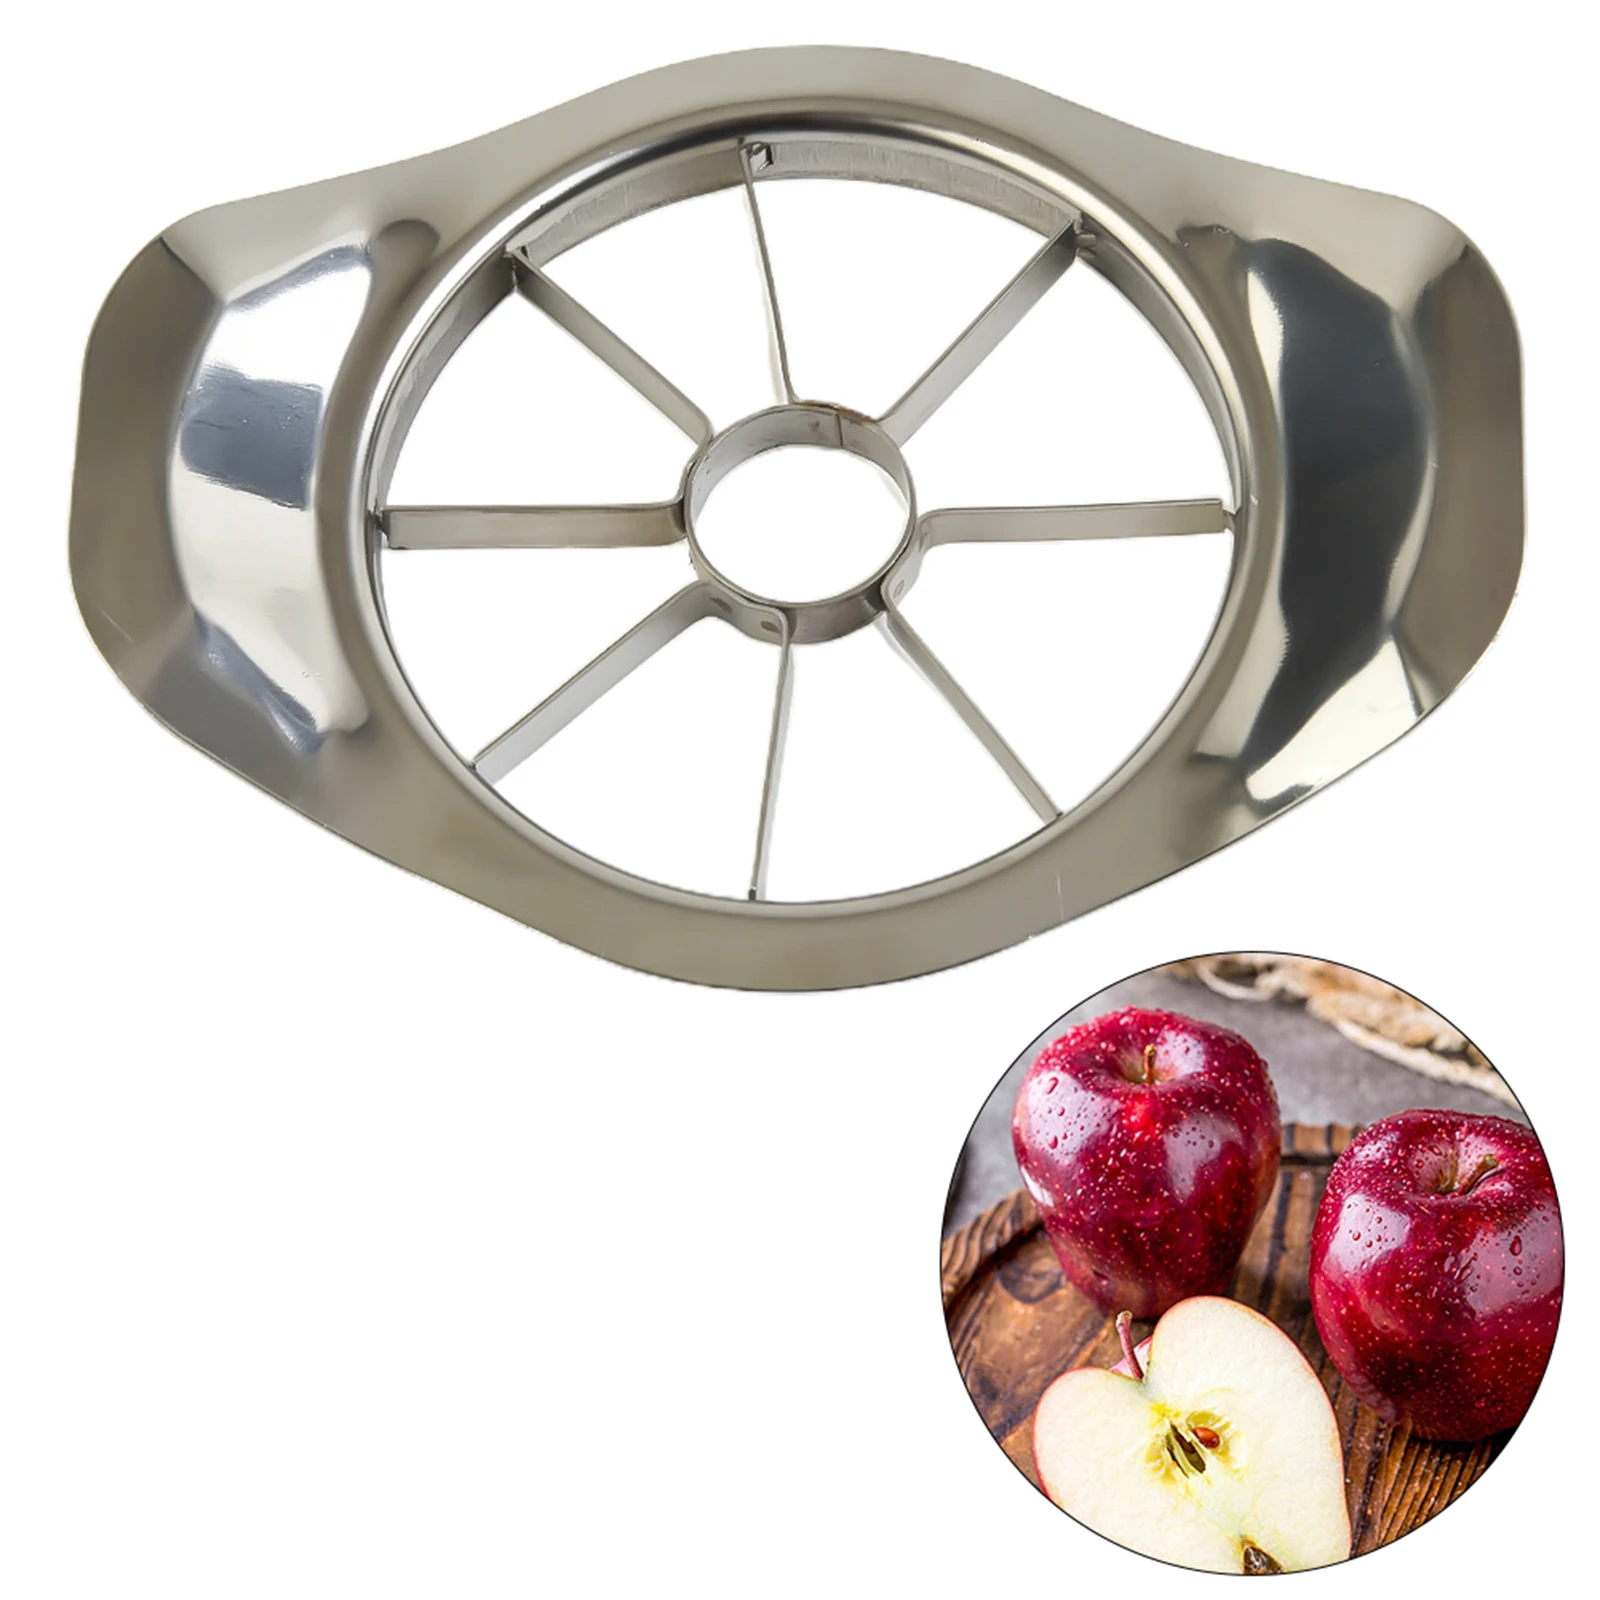 

Stainless Steel Apple Cutter Fruit Vegetable Cutting Tools Apple Pear Divider Slicer Ultra-Sharp Cutting Corer Kitchen Gadgets